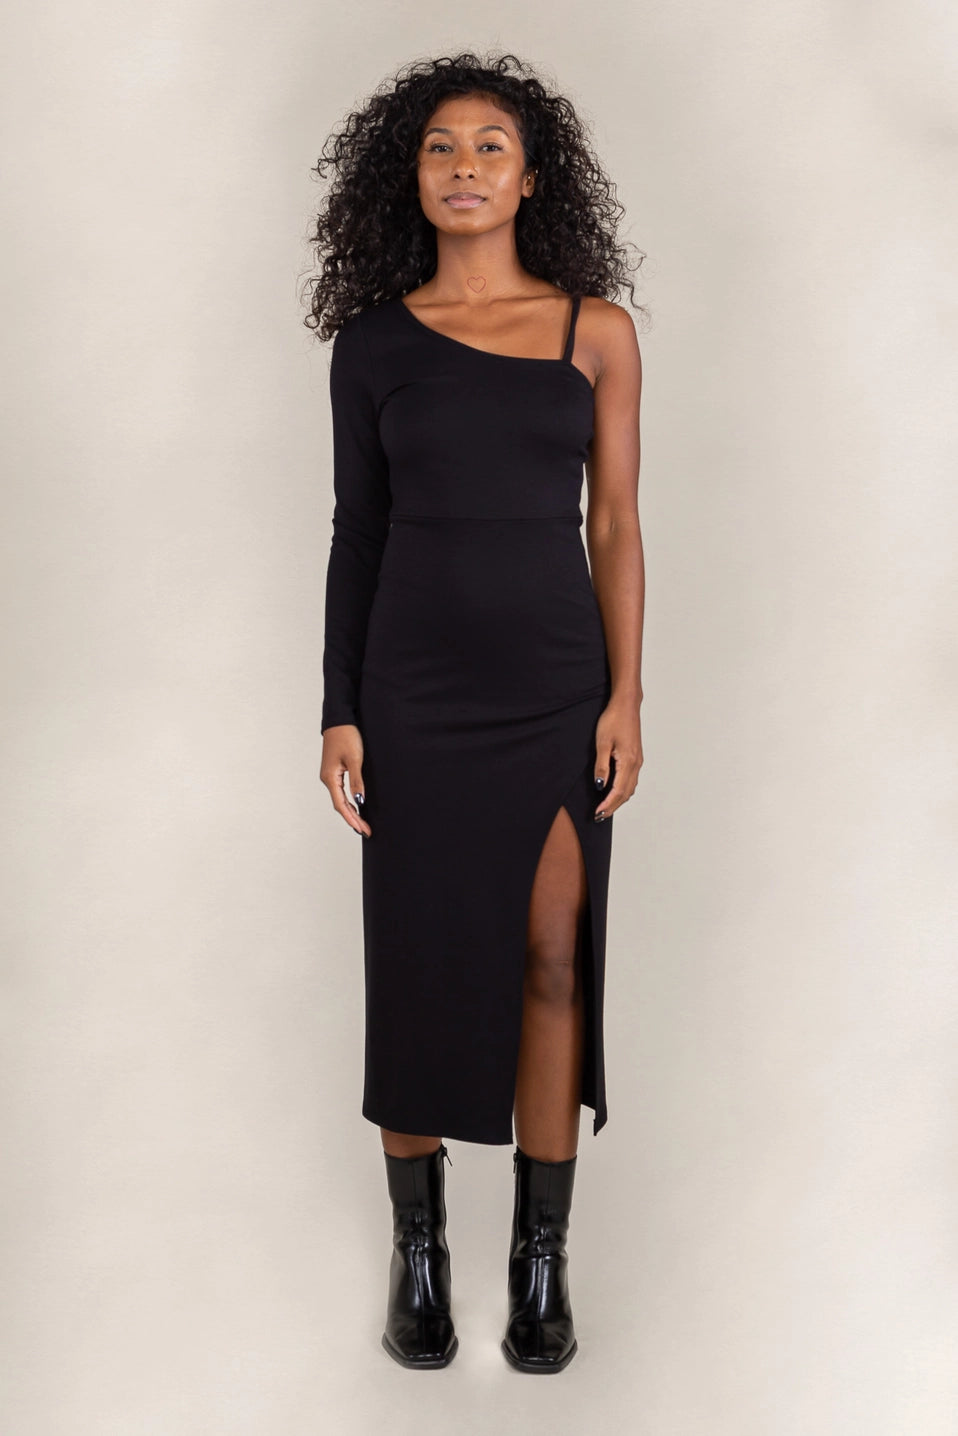 Asymmetrical Black Dress Apex Ethical Boutique